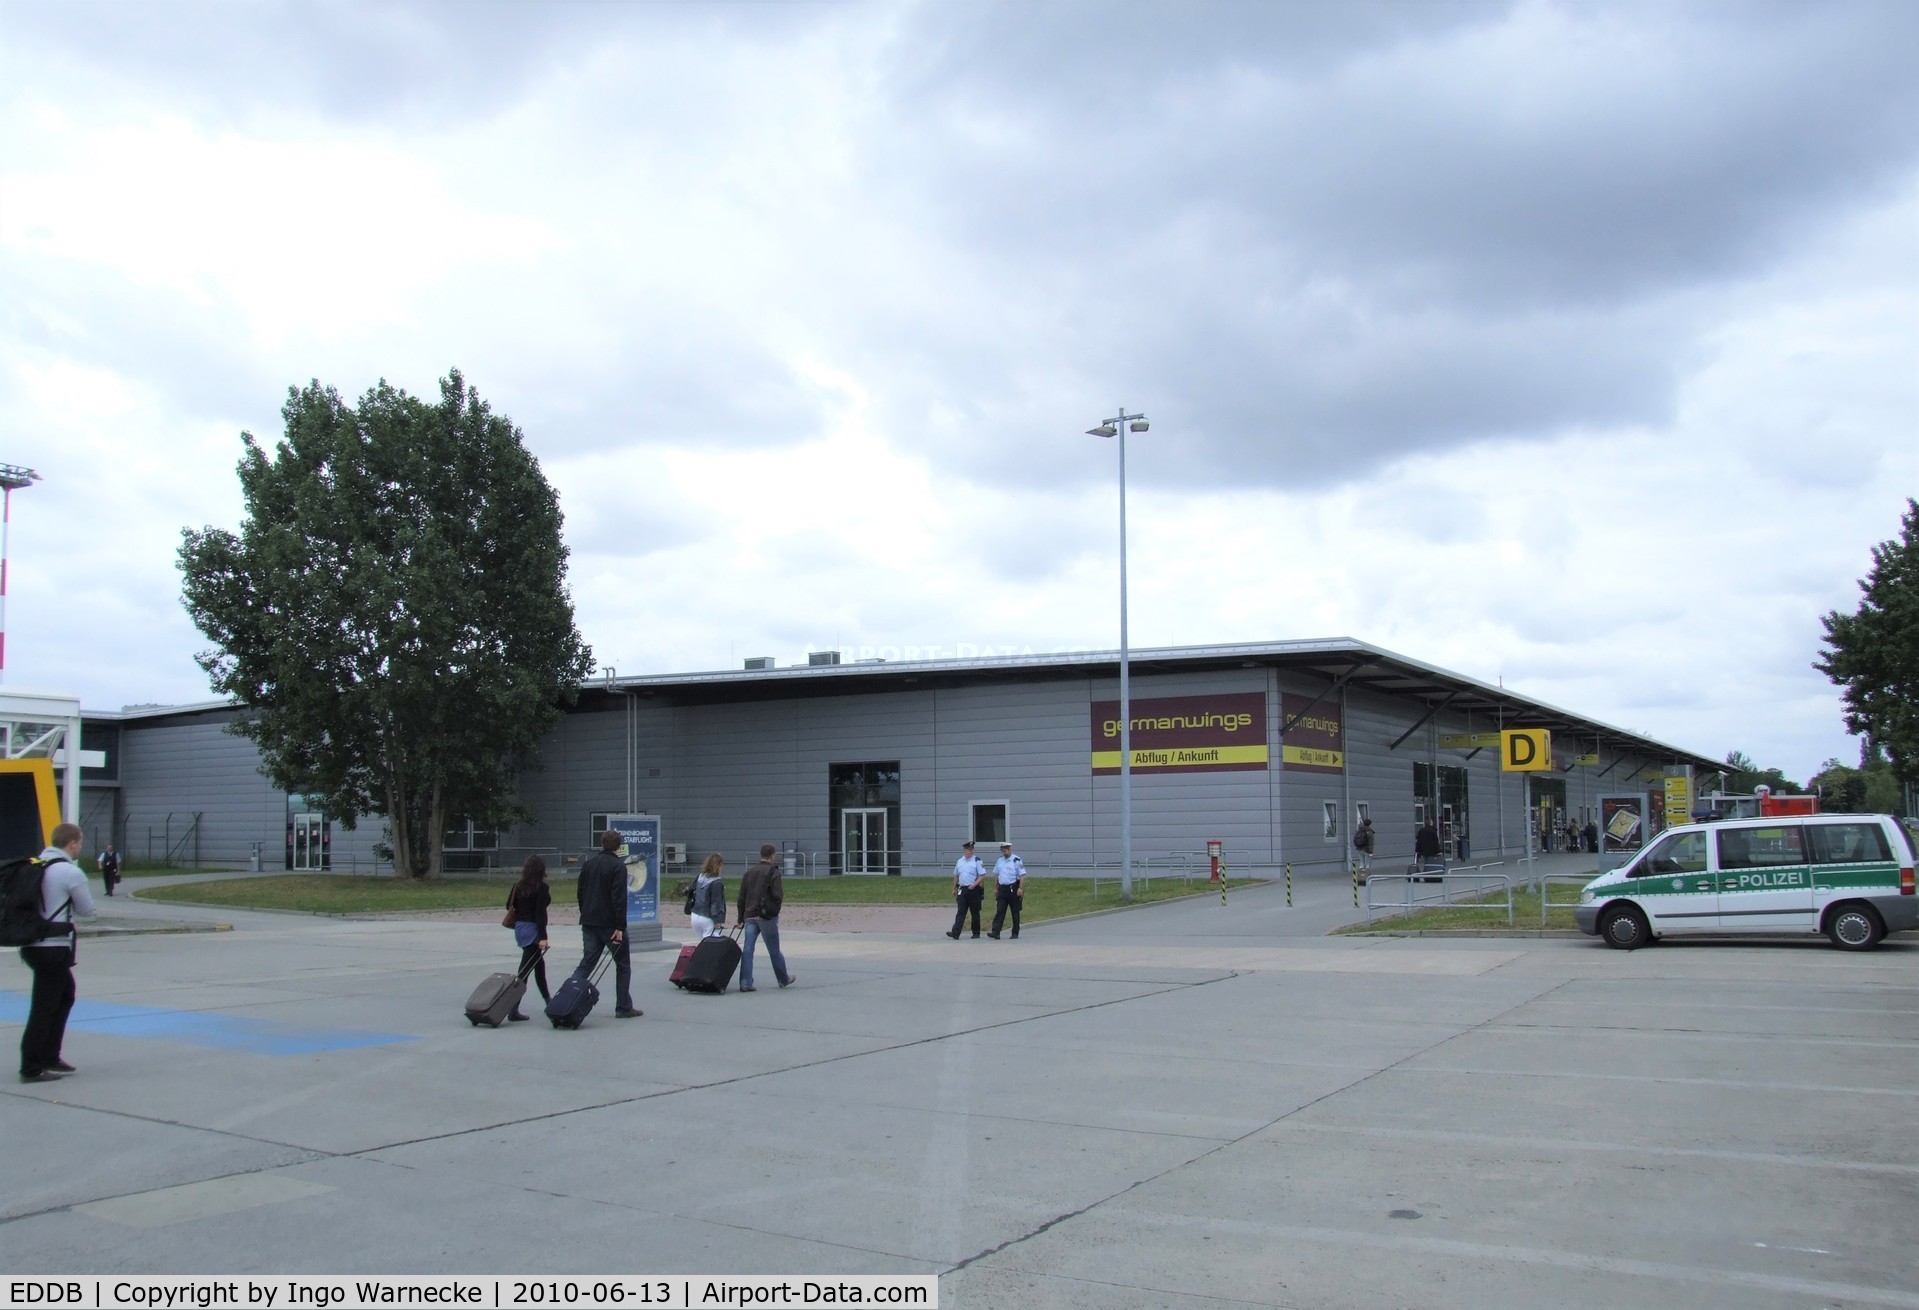 Berlin Brandenburg International Airport, Berlin Germany (EDDB) - the Germanwings terminal D at Schönefeld airport